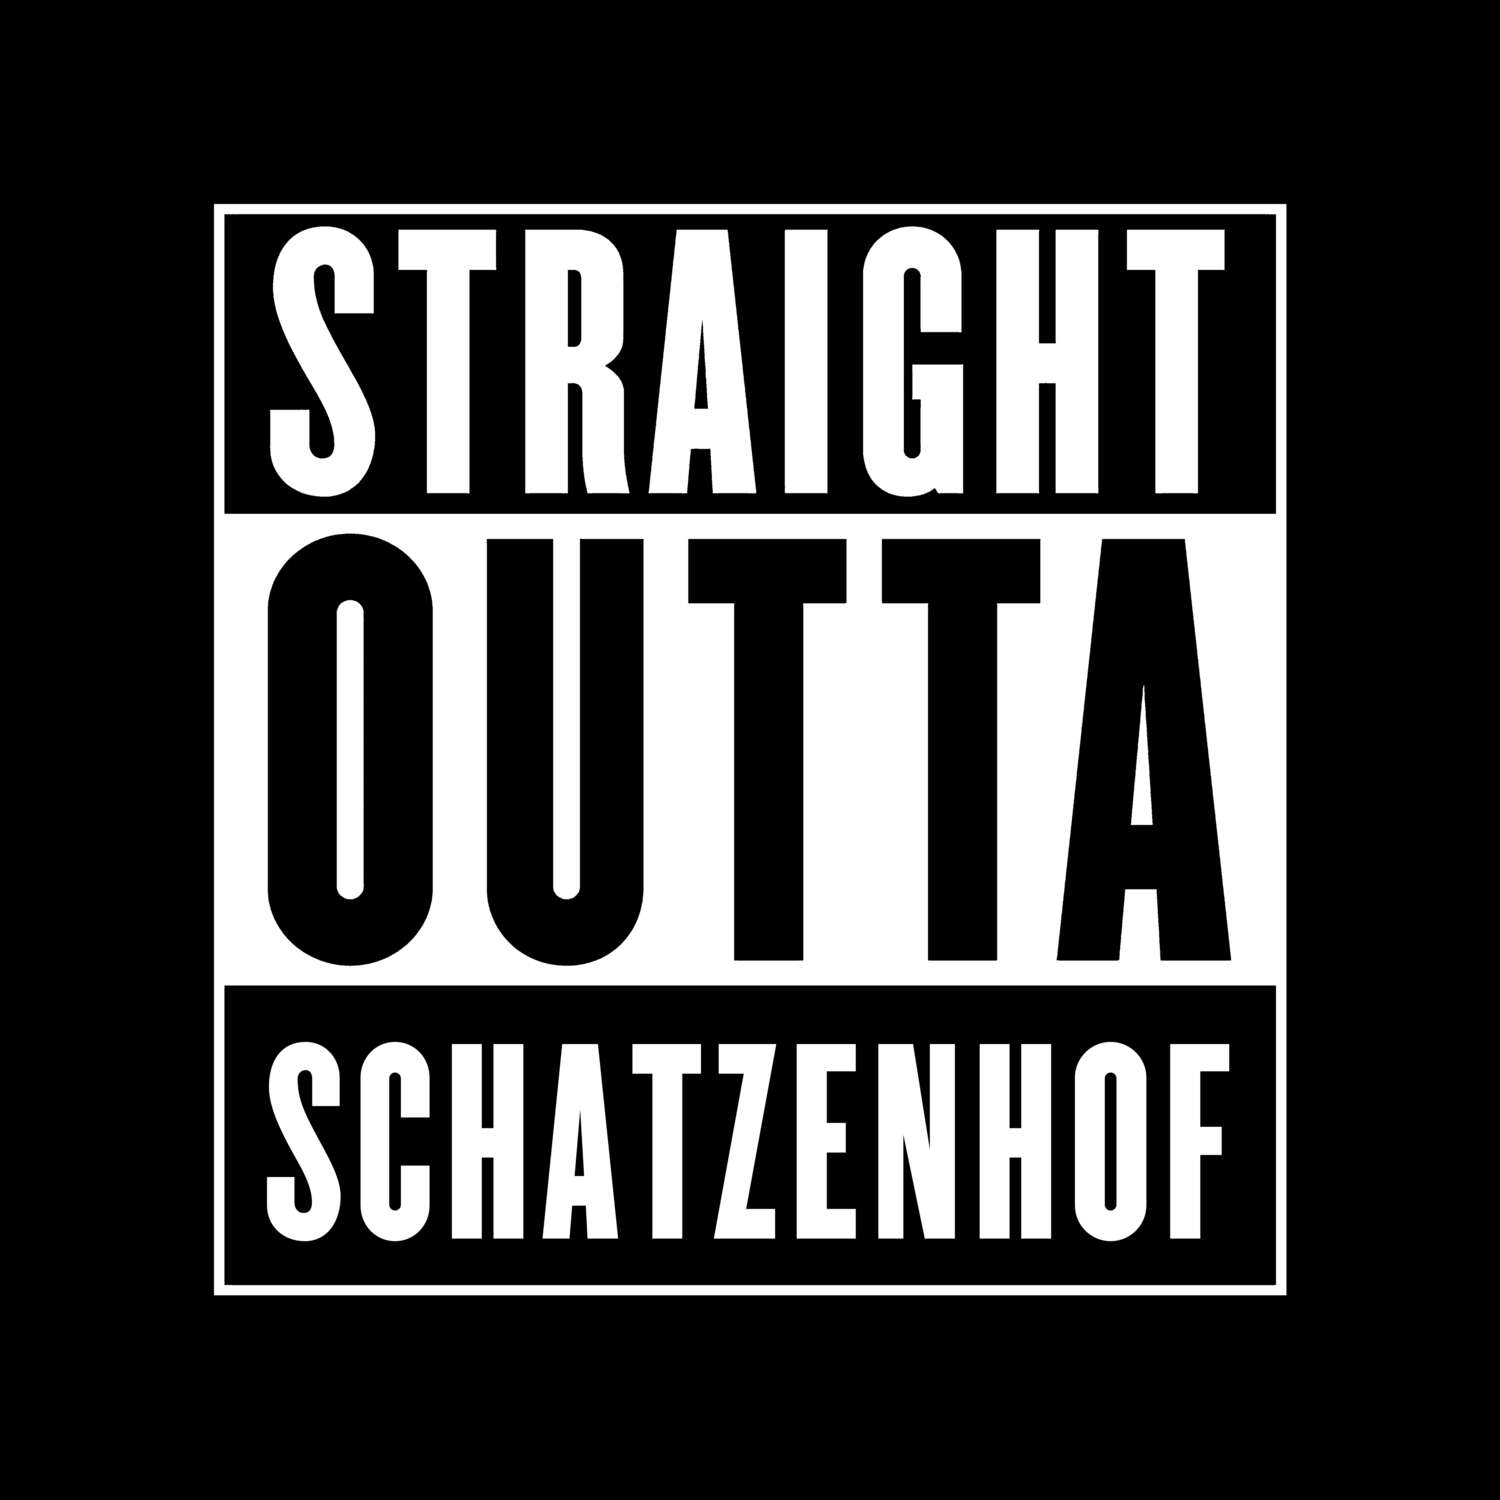 Schatzenhof T-Shirt »Straight Outta«